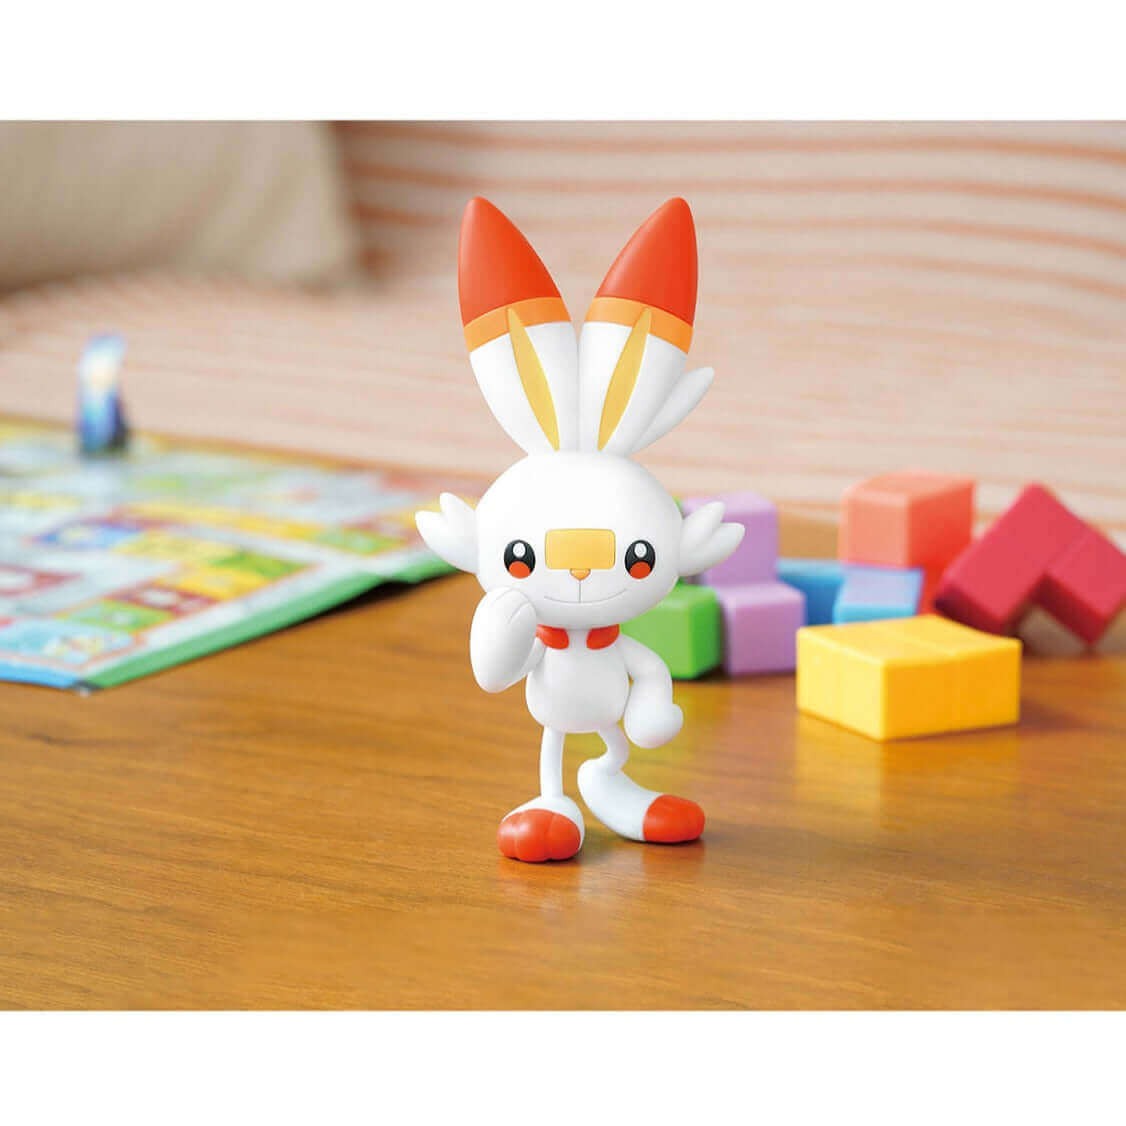 05 Scorbunny Model kit - Pokémon Plamo Quick! Collection - konbinistop